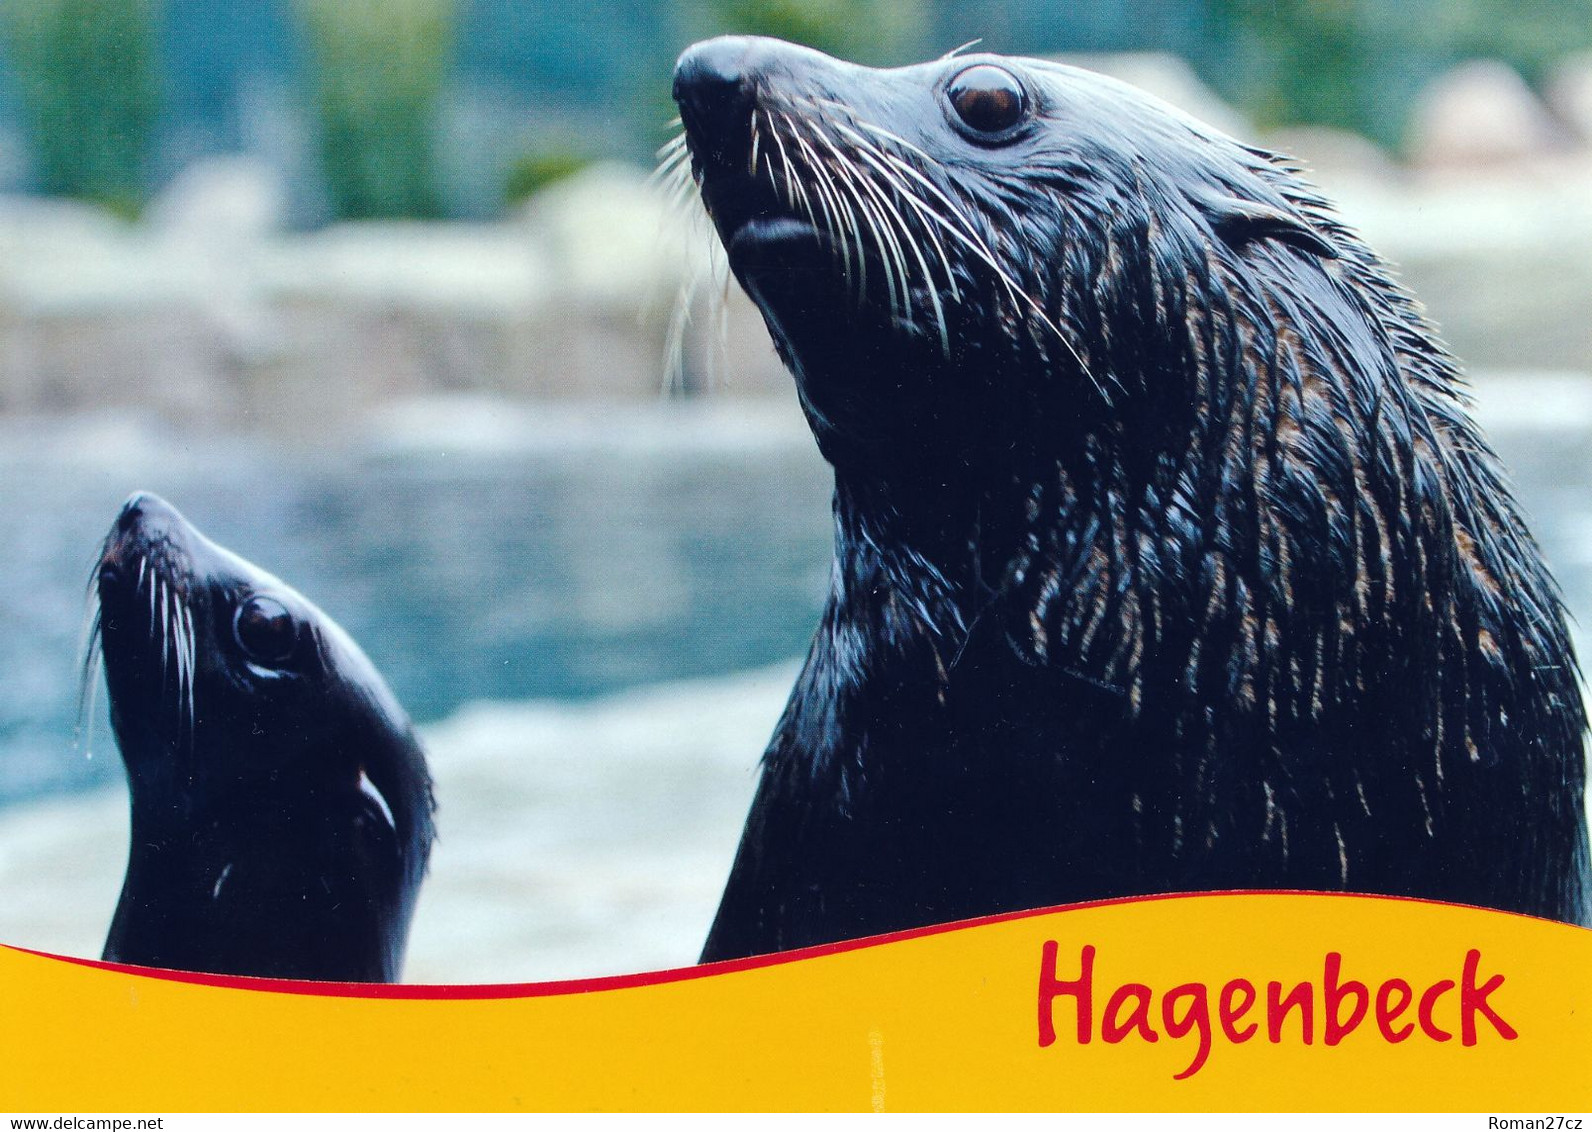 Hagenbeck Tierpark Hamburg, Germany - South American Fur Seal - Stellingen